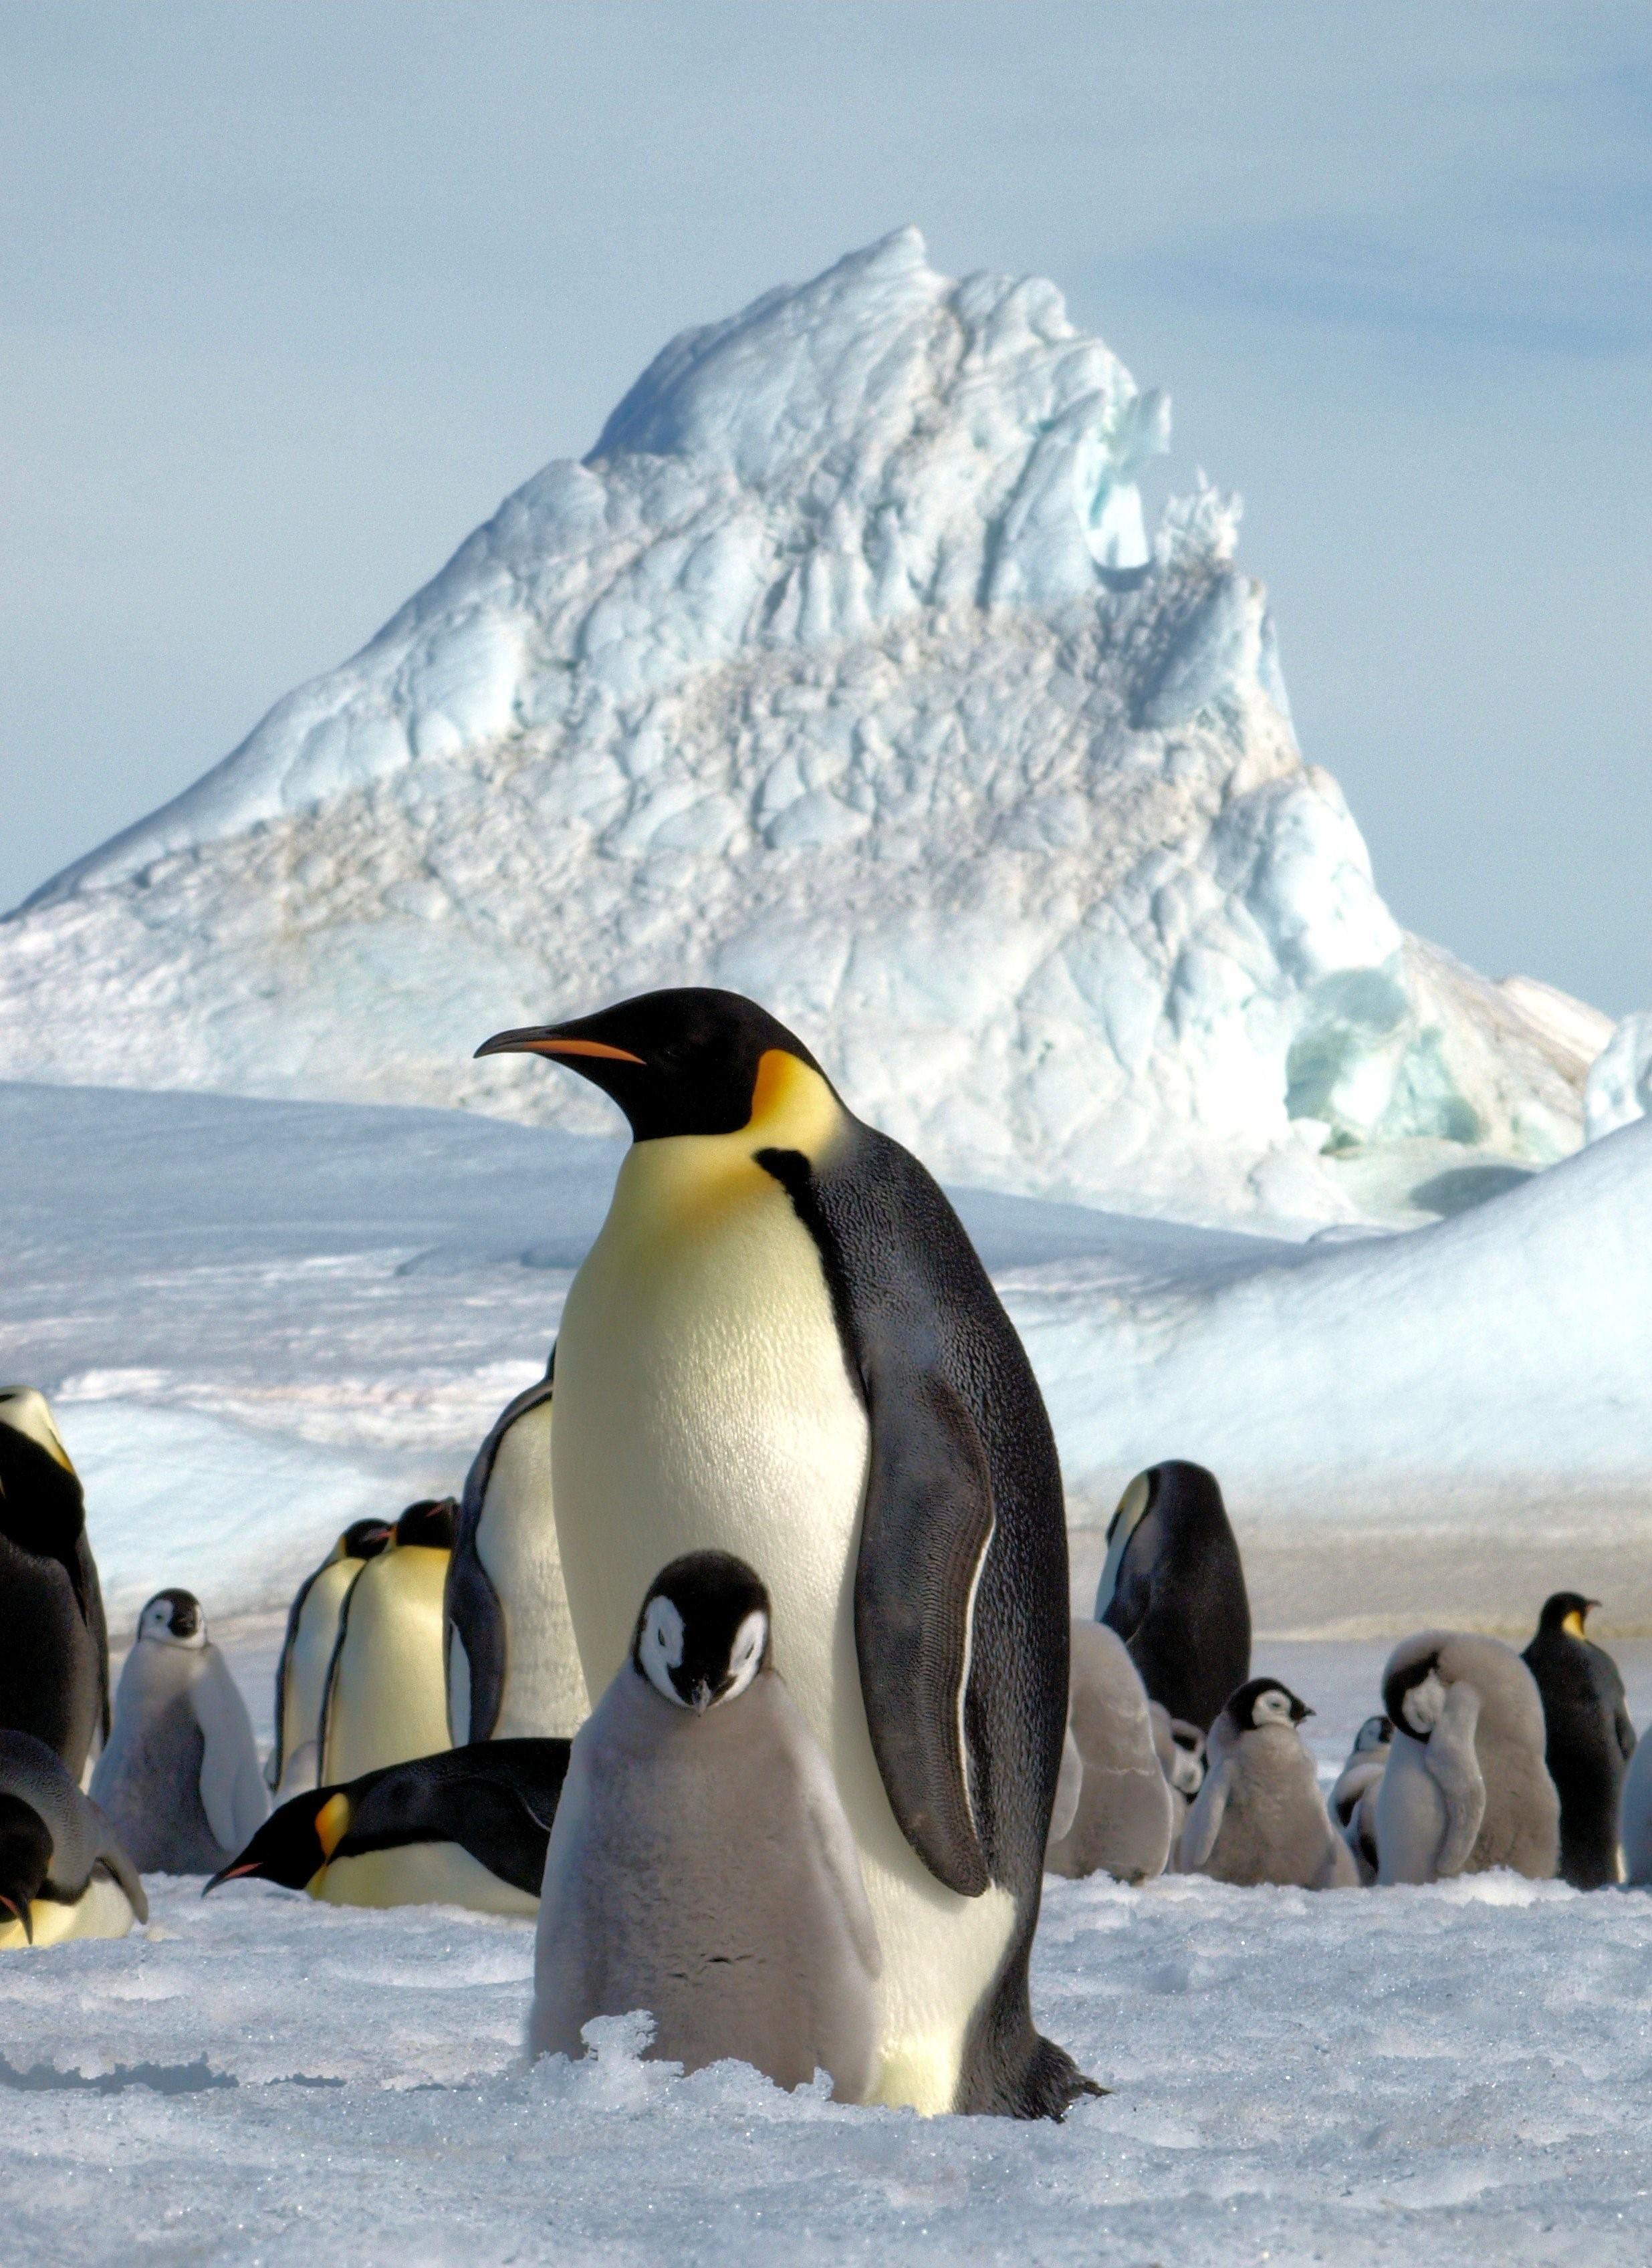 Где живет императорский пингвин. Антарктида материк пингвины. Императорский Пингвин в Антарктиде. Животные Антарктиды пингвины. Императорский Пингвин Антарктида Континент.